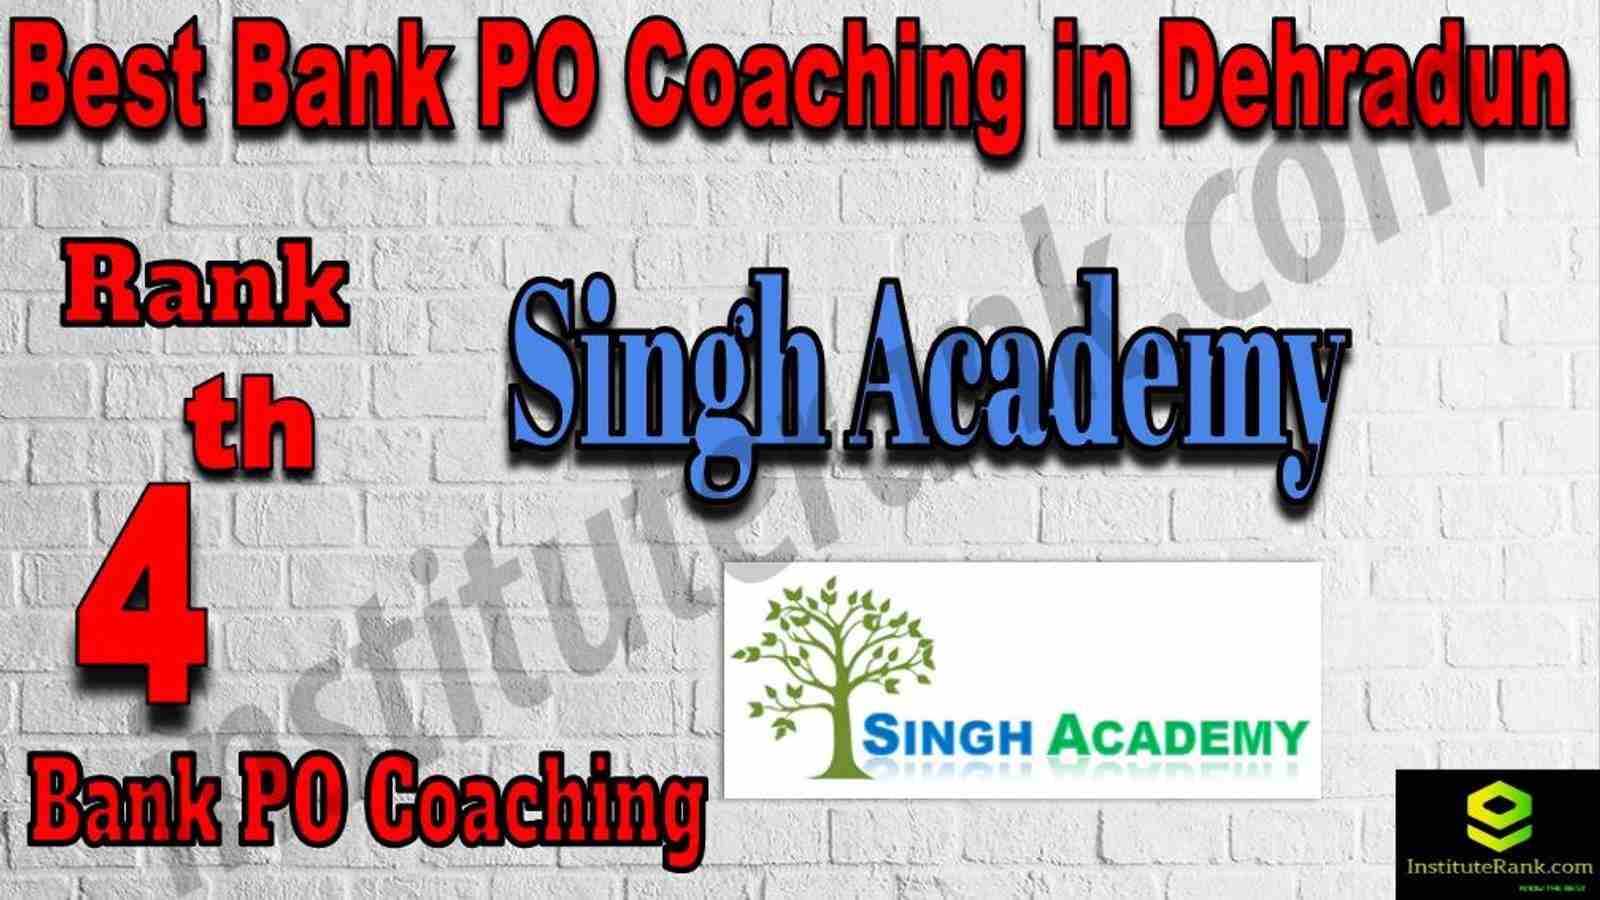 4th Best Bank PO Coaching in Dehradun